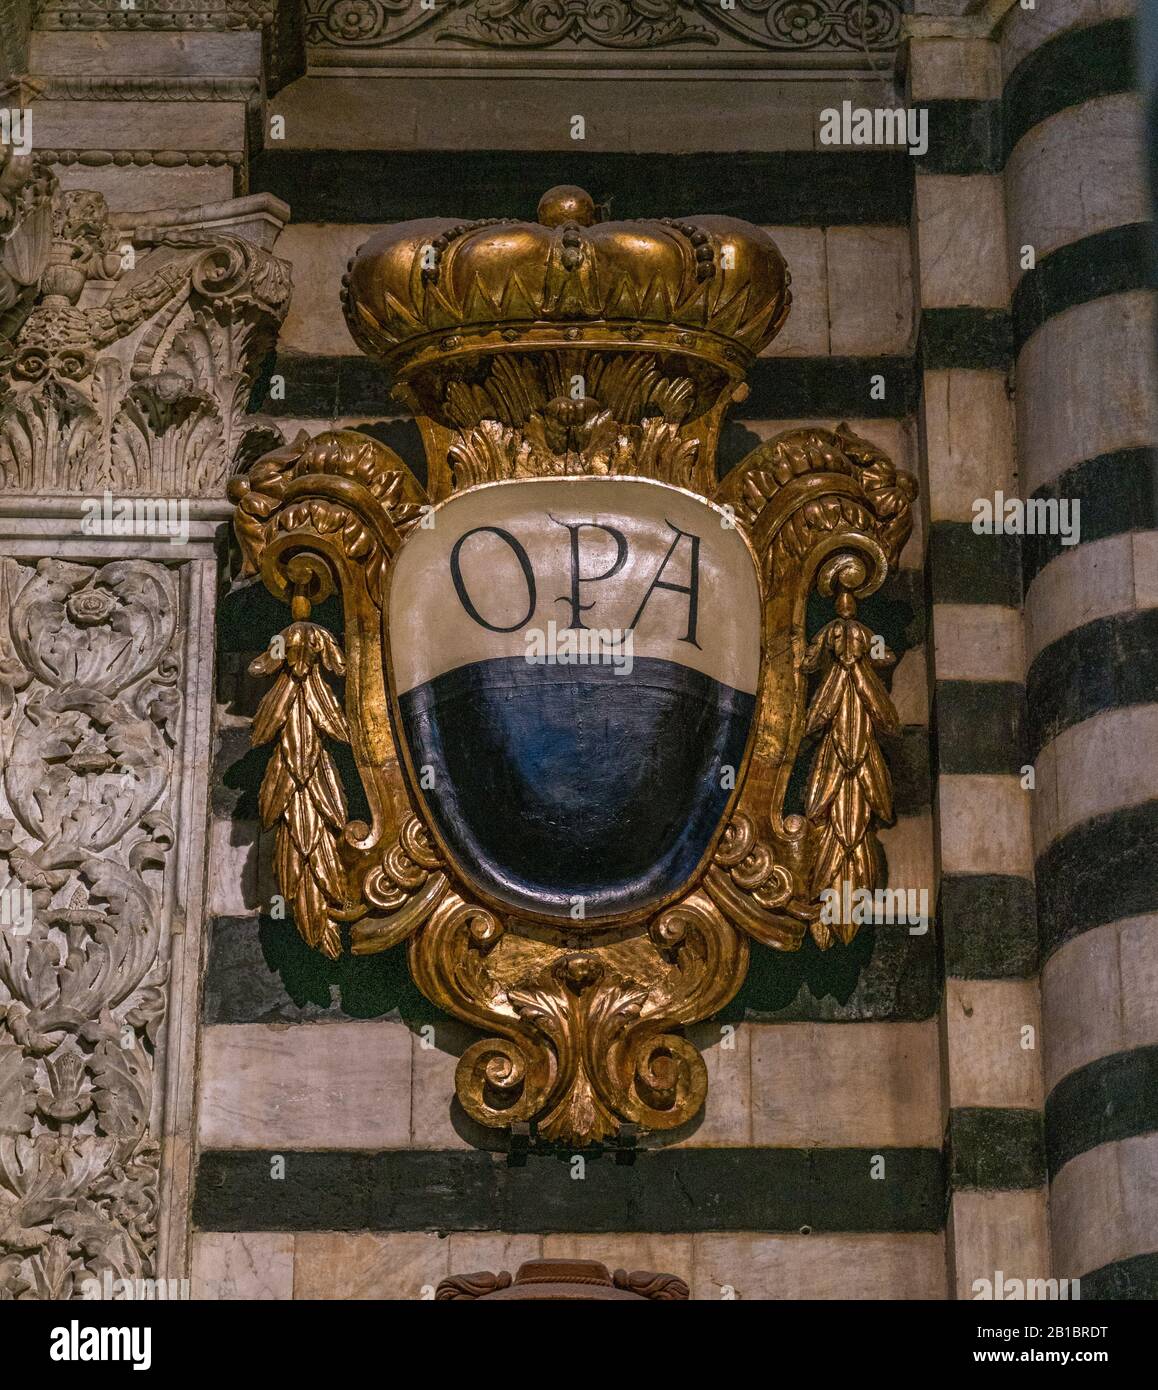 OPA-Wappen im Dom von Siena, Toskana, Italien. Stockfoto